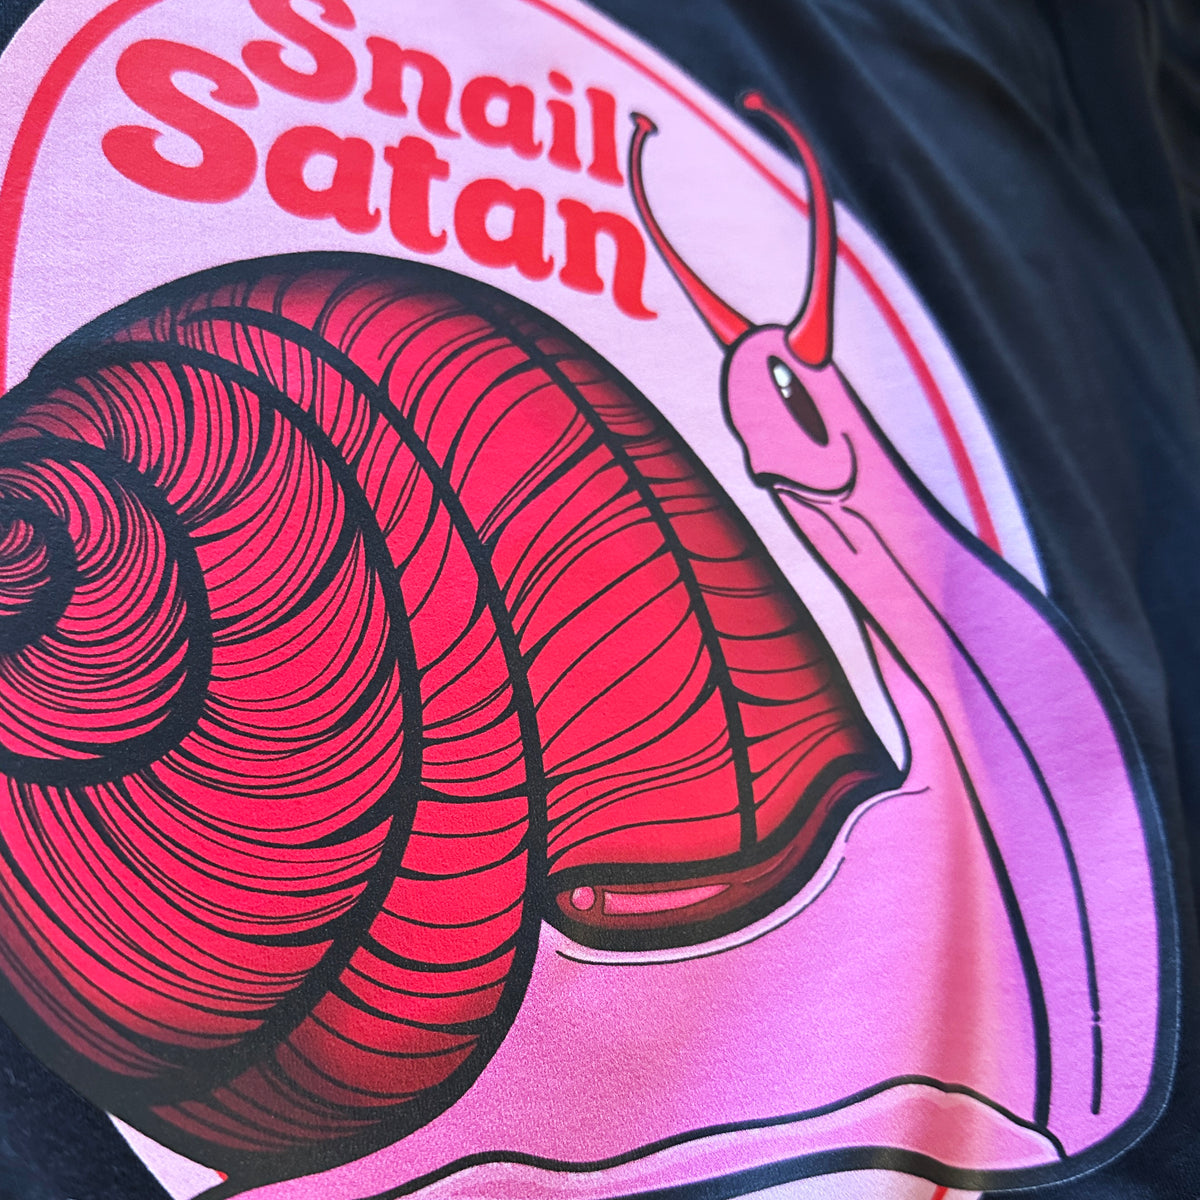 Snail Satan Sweatshirt